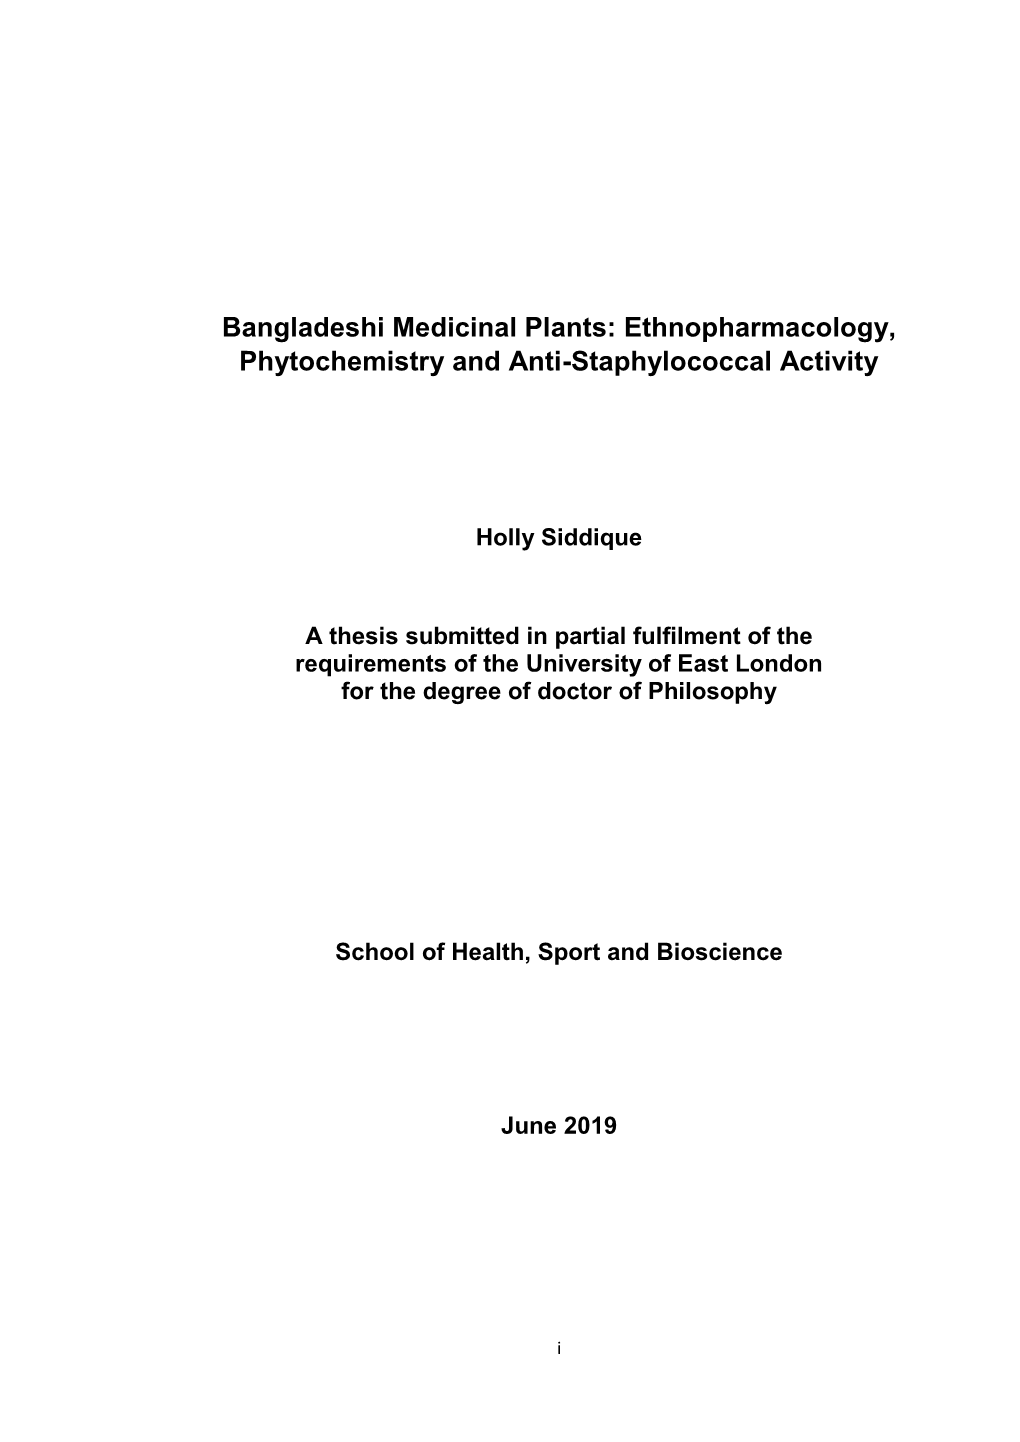 Bangladeshi Medicinal Plants: Ethnopharmacology, Phytochemistry and Anti-Staphylococcal Activity